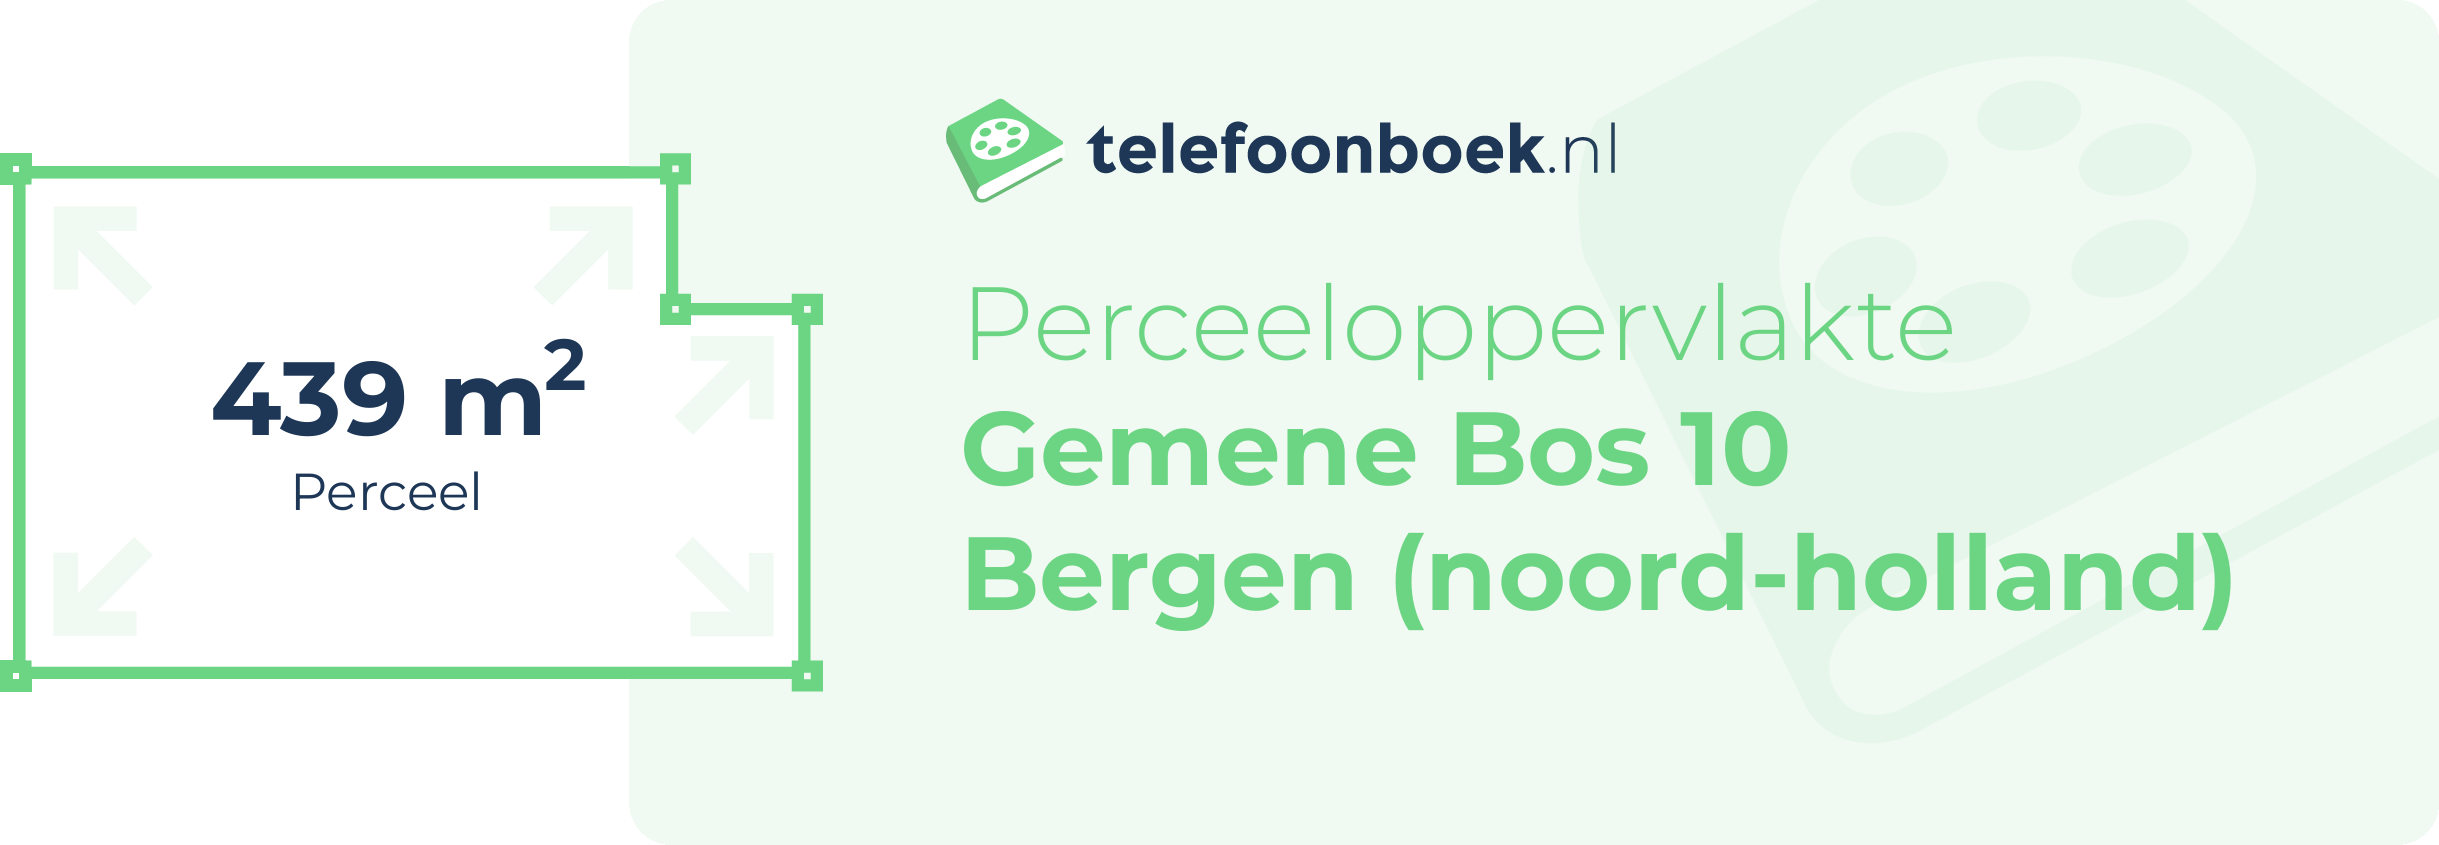 Perceeloppervlakte Gemene Bos 10 Bergen (Noord-Holland)